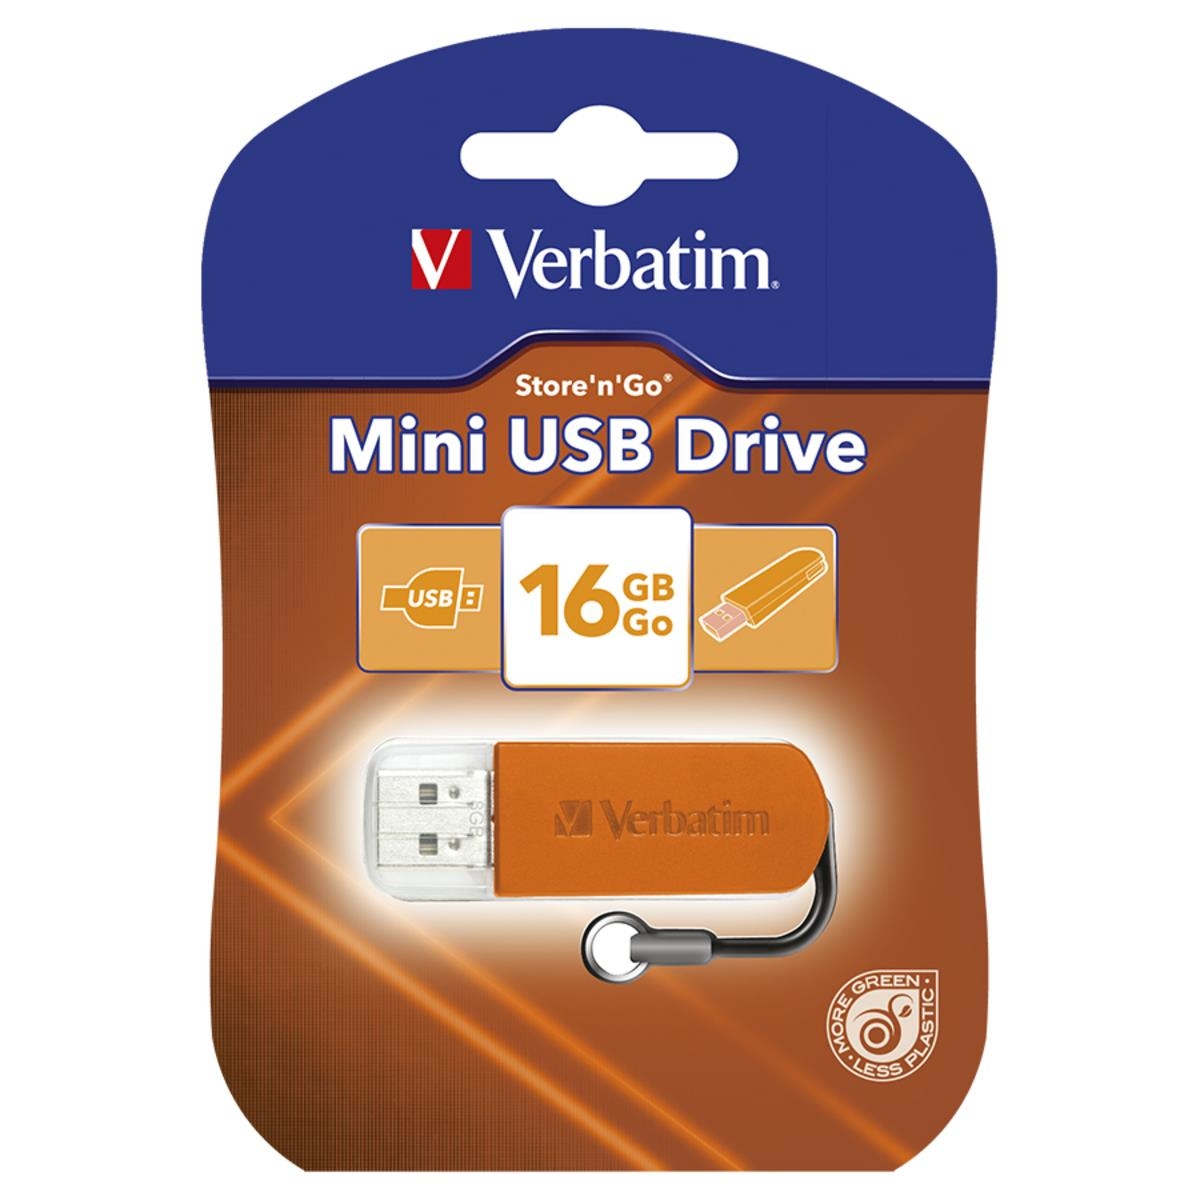 Verbatim Store 'n' Go Mini USB Drive - 16GB, Orange